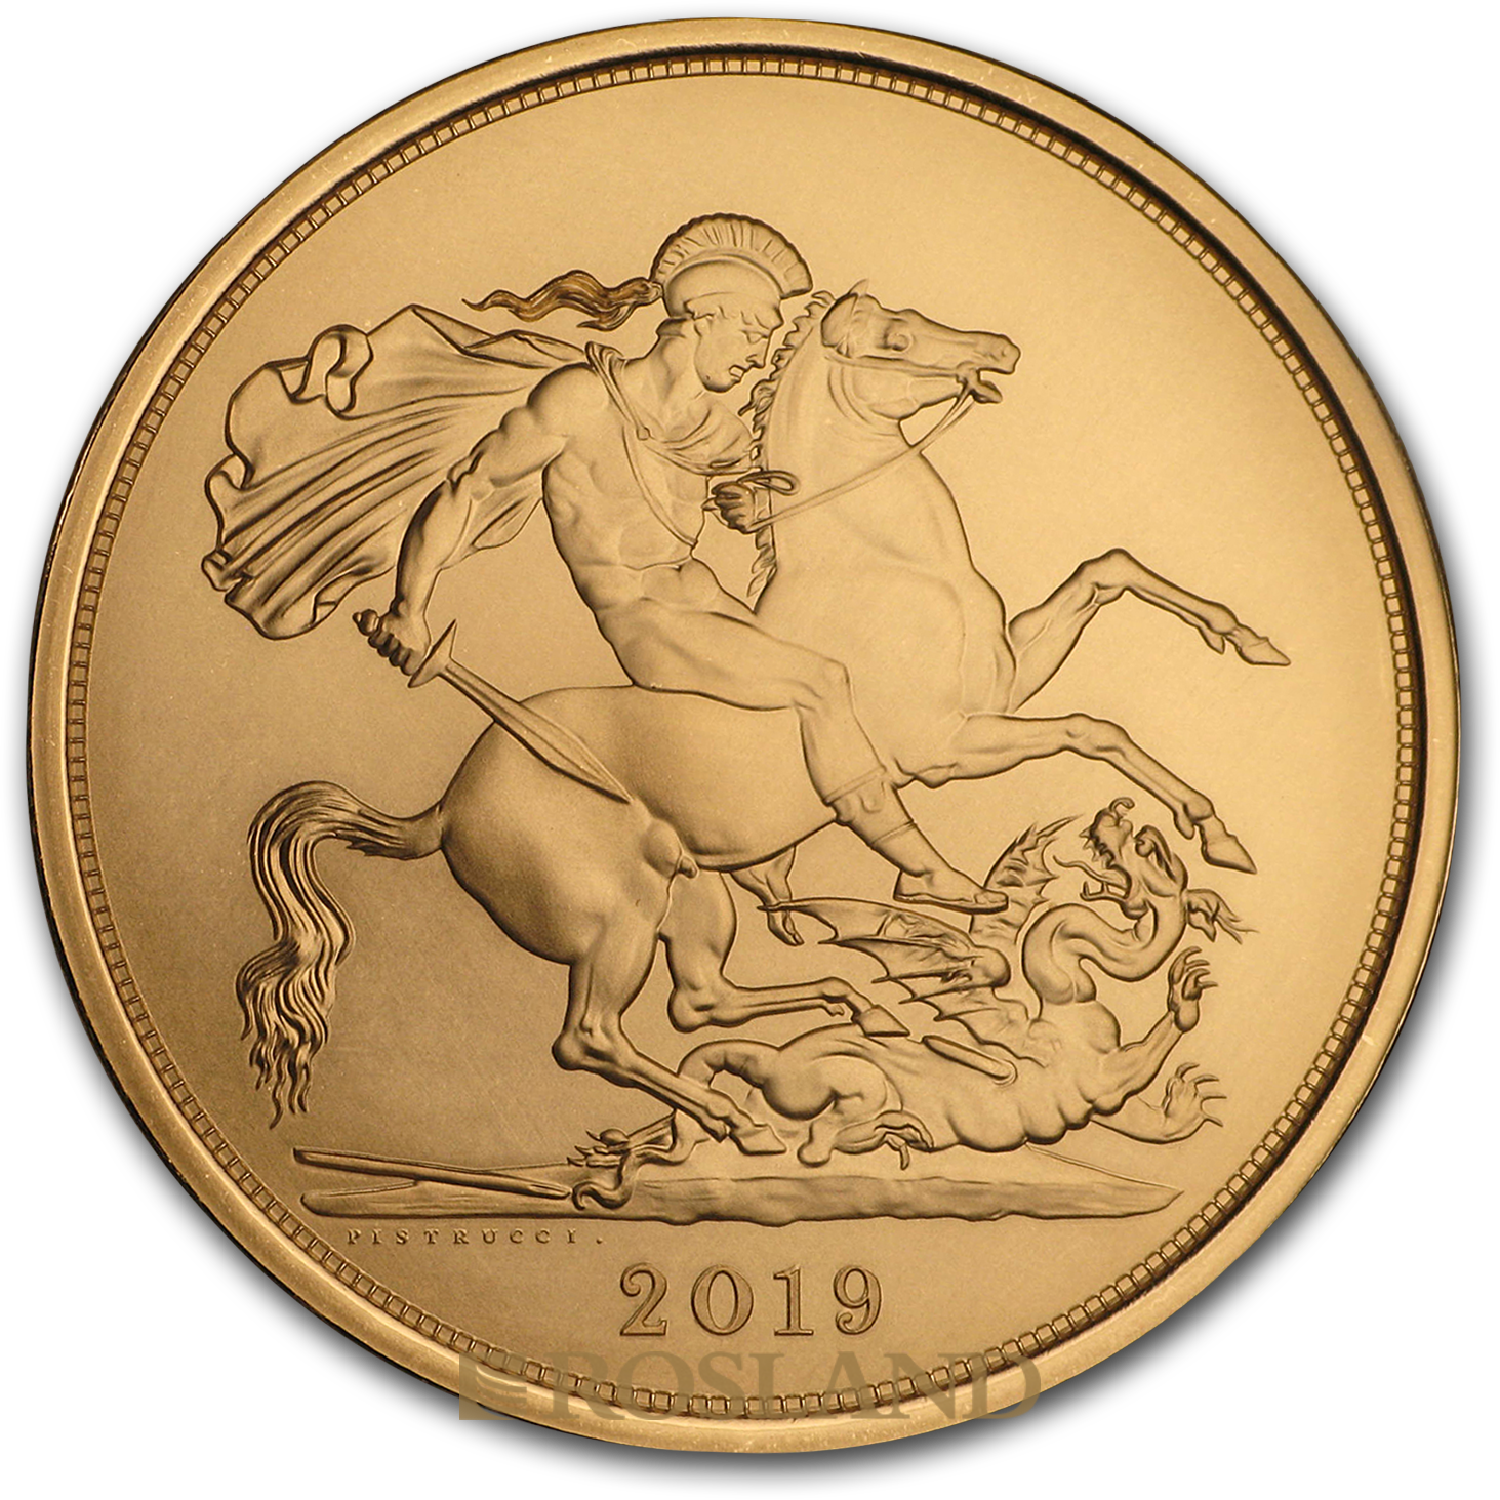 5 Sovereign Goldmünze Großbritannien 2019 (Box, Zertifikat)